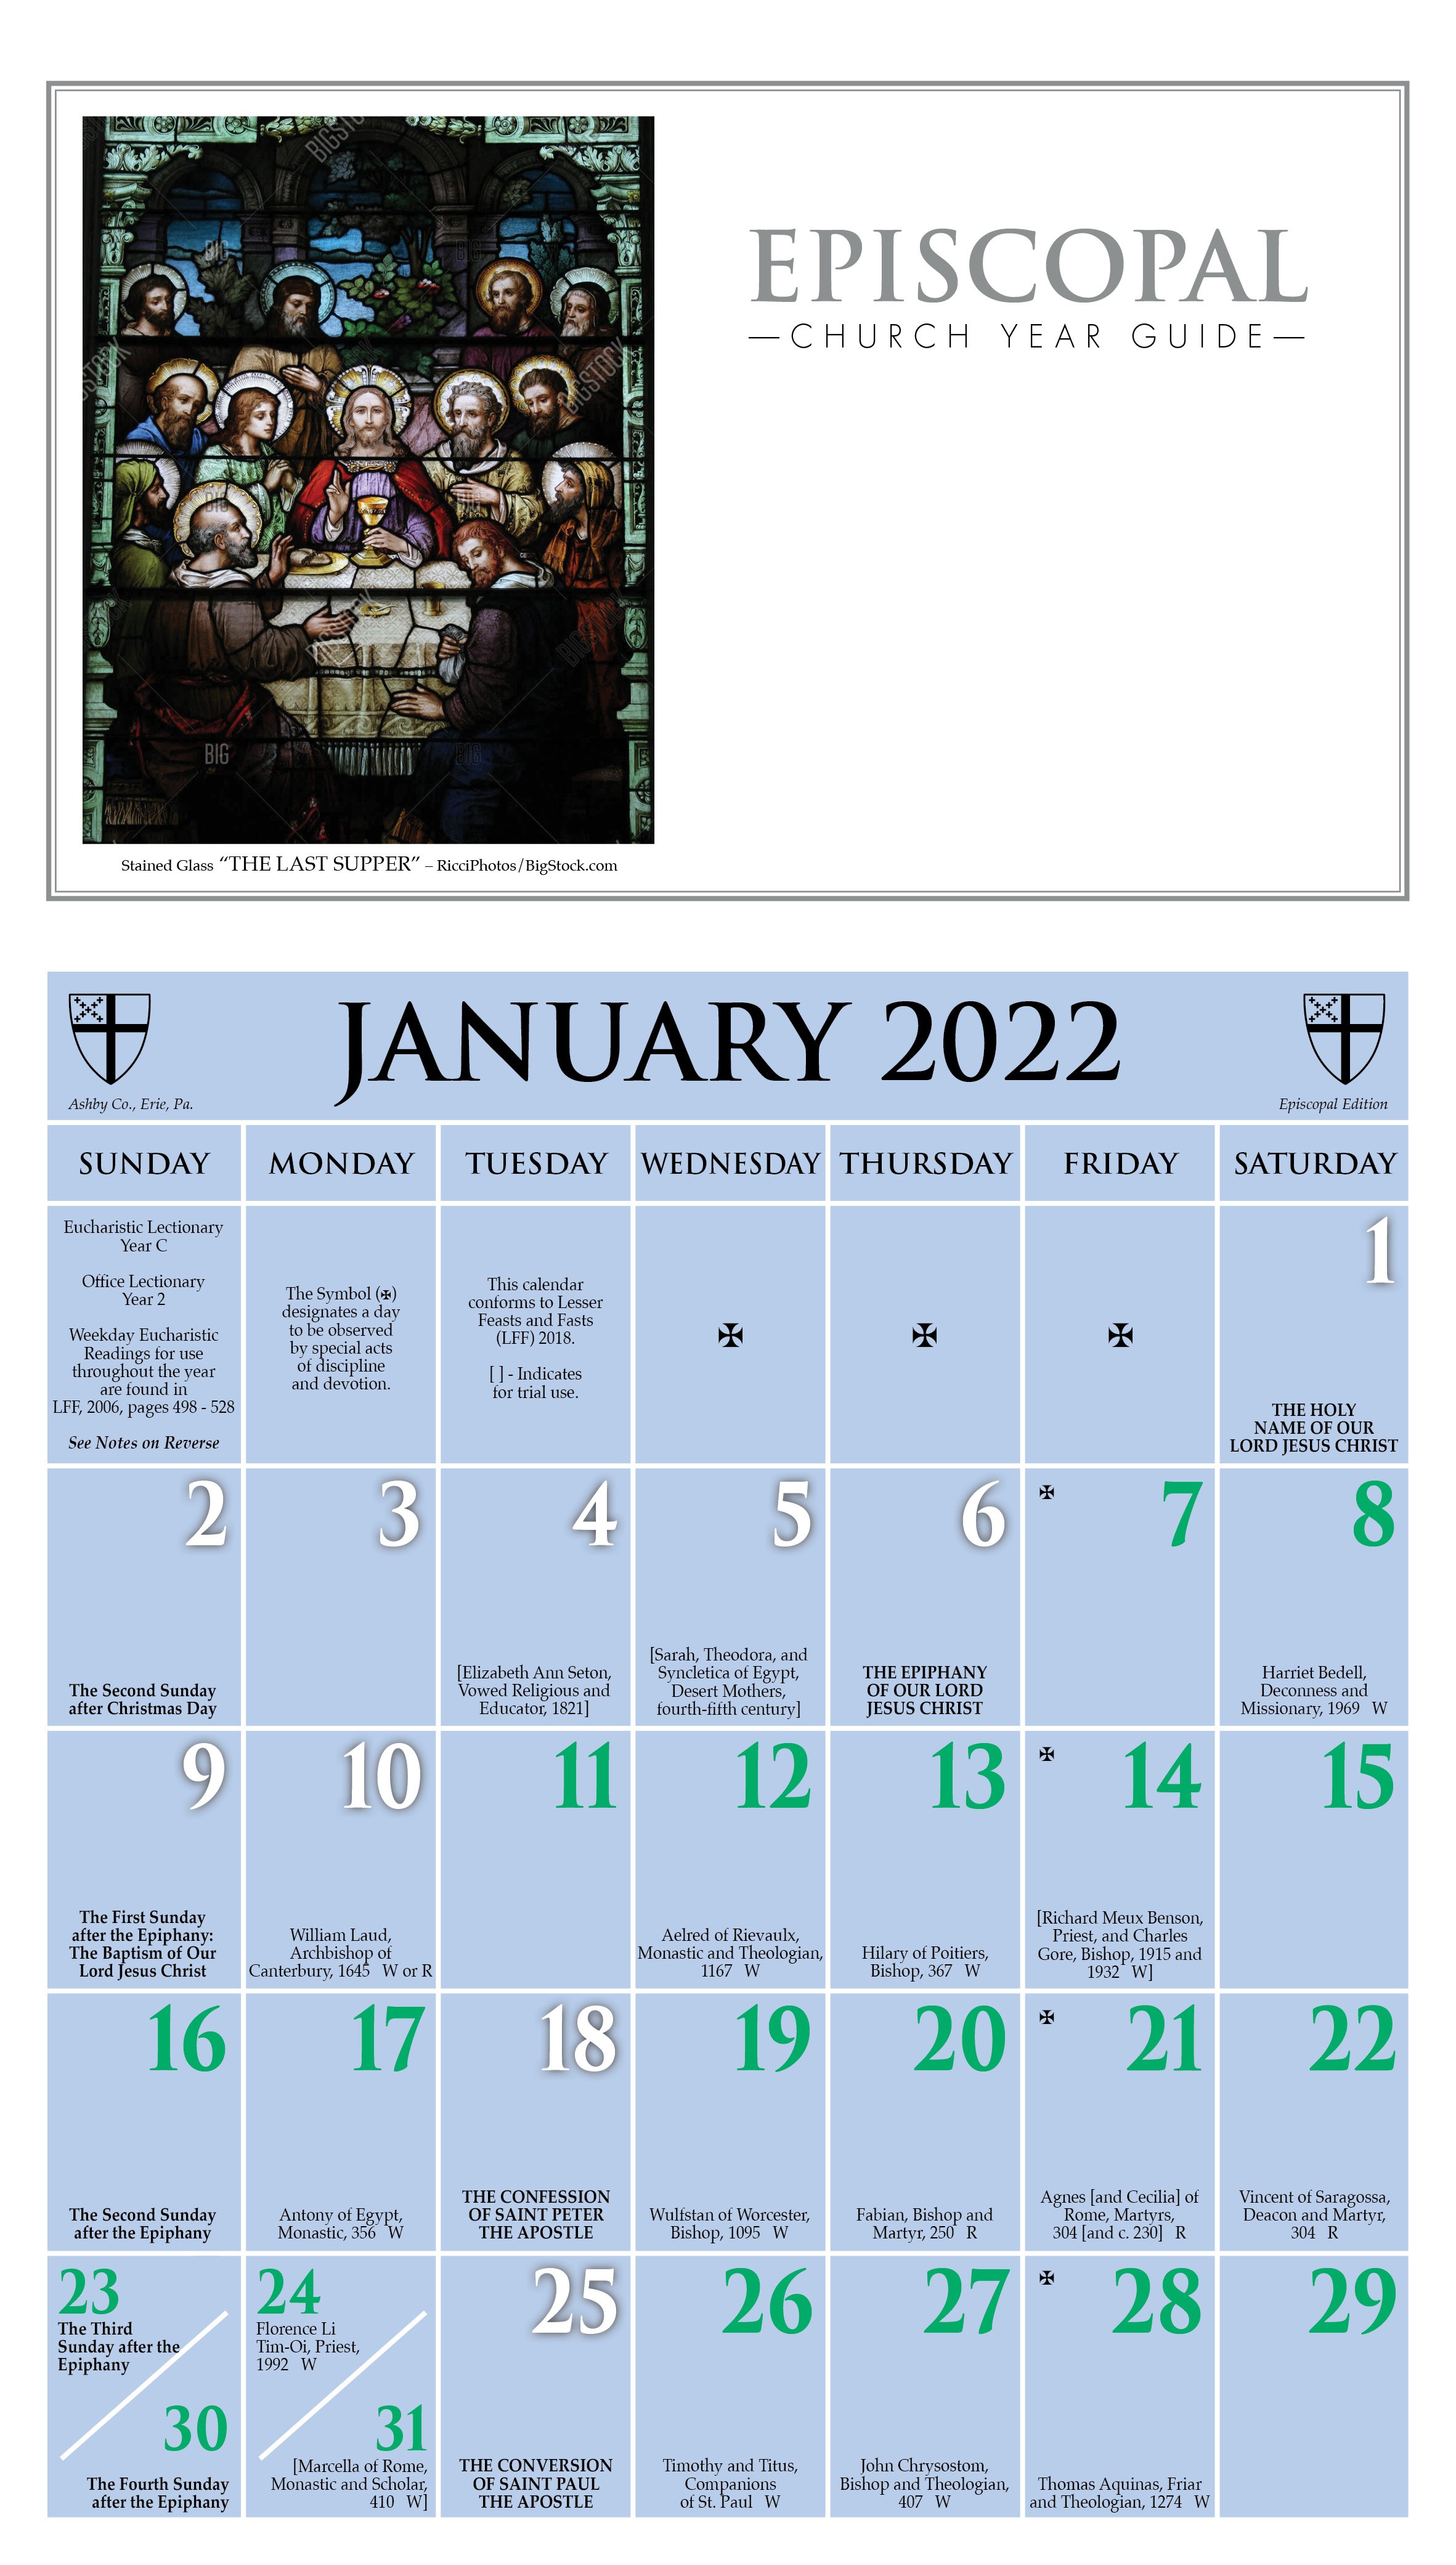 Lectionary Calendar 2022 Churchpublishing.org: 2022 Episcopal Church Year Guide Kalendar